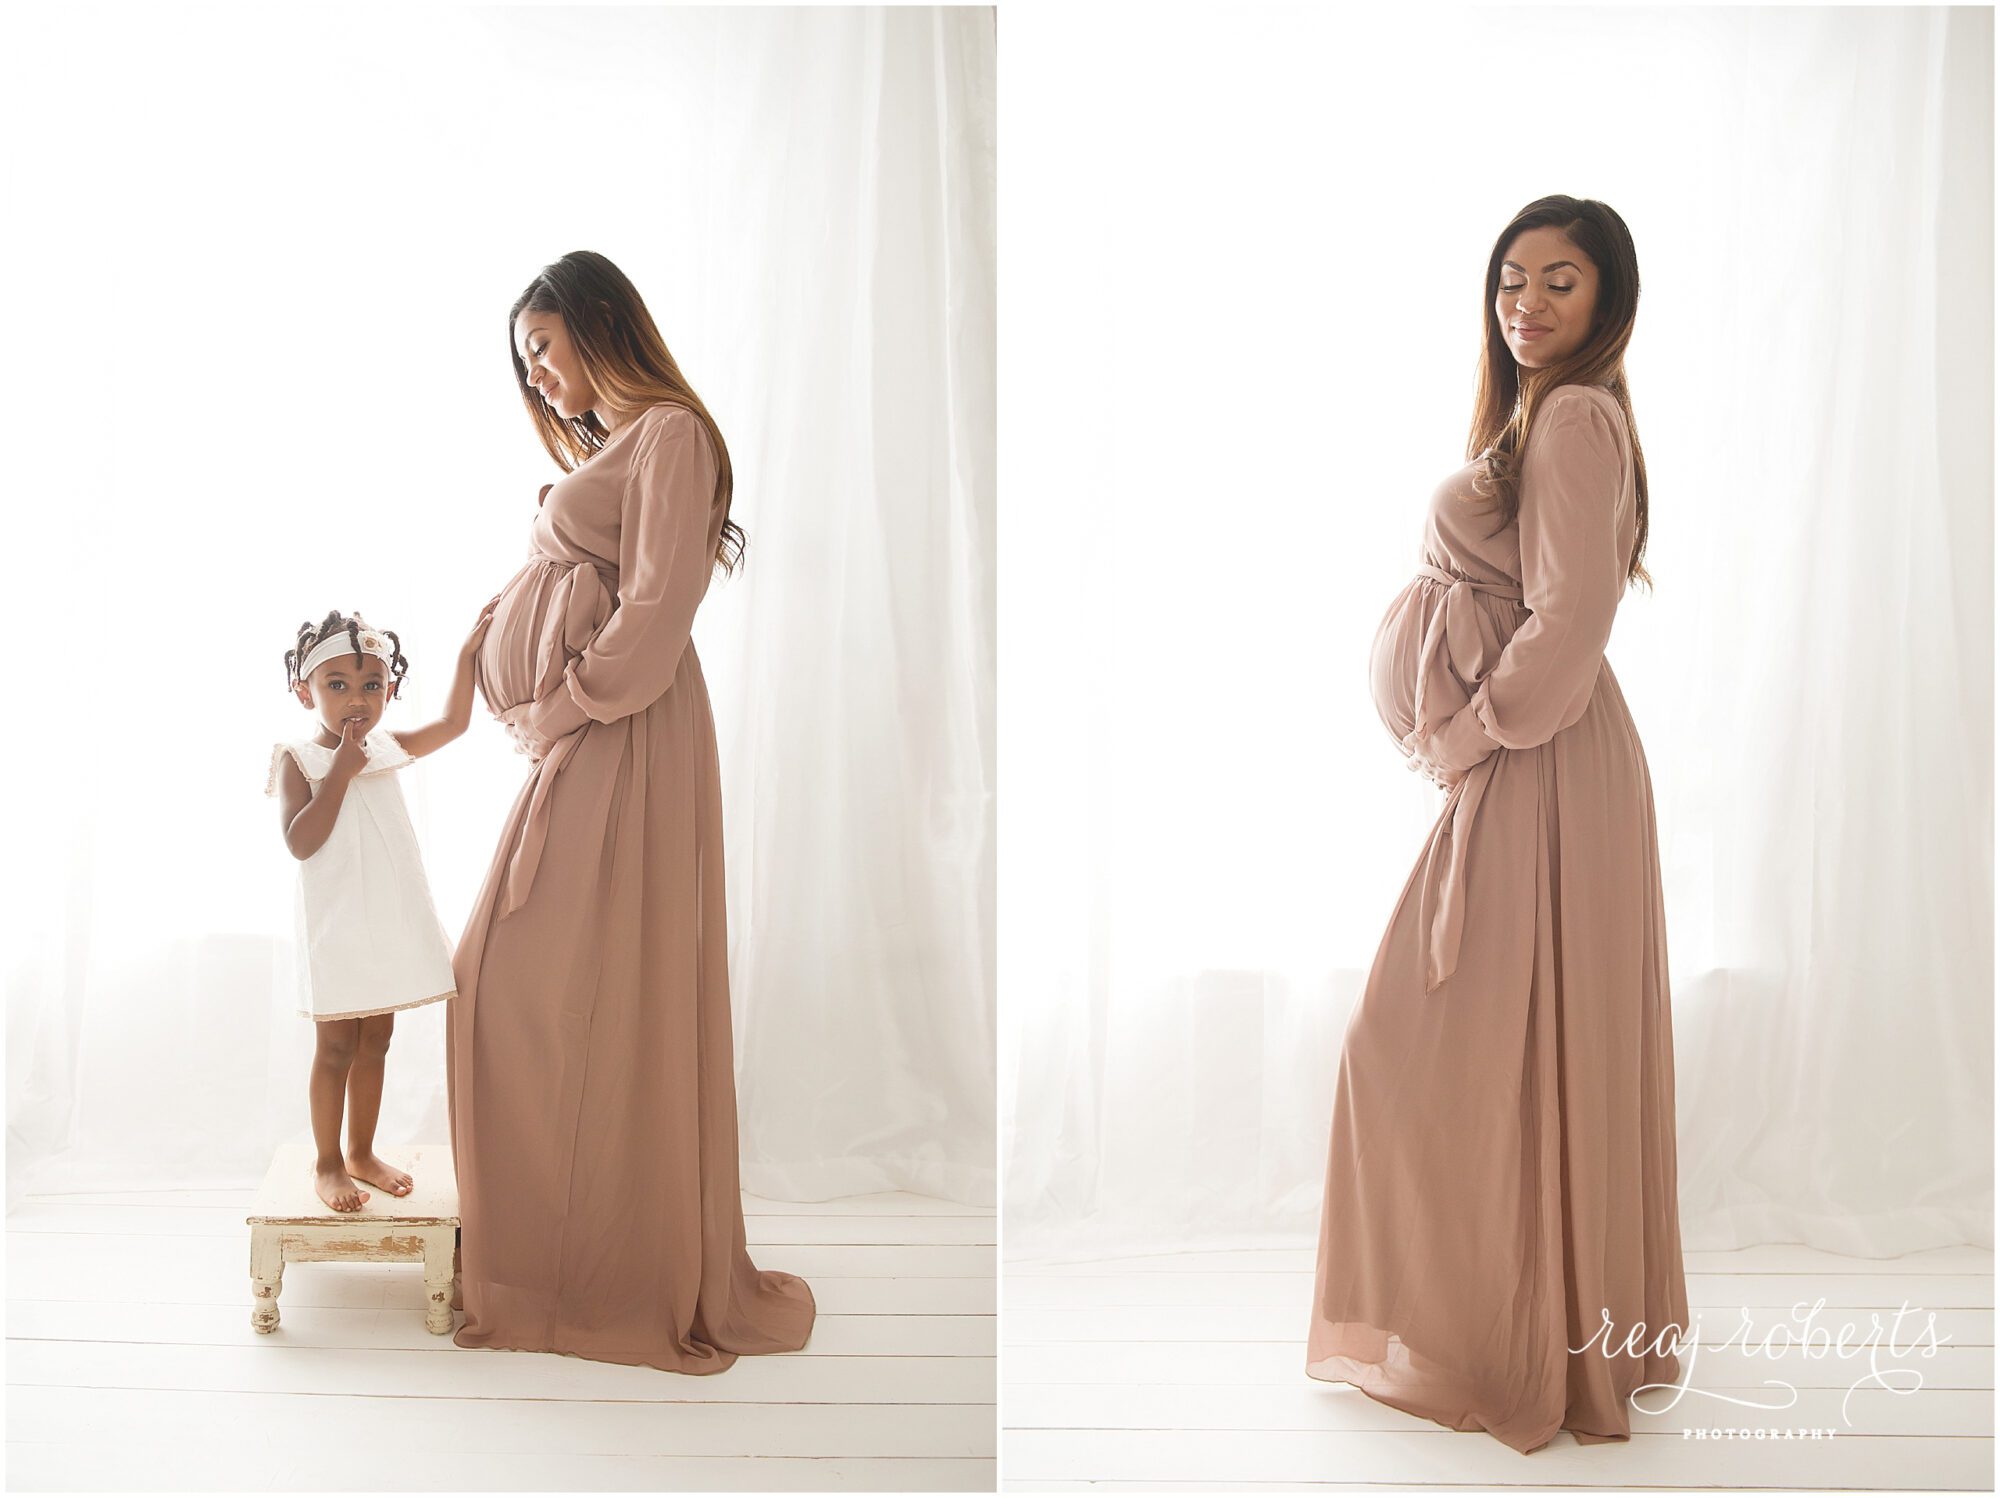 Wrap Maxi Dress for maternity photos | Chandler, AZ | Reaj Roberts Photography